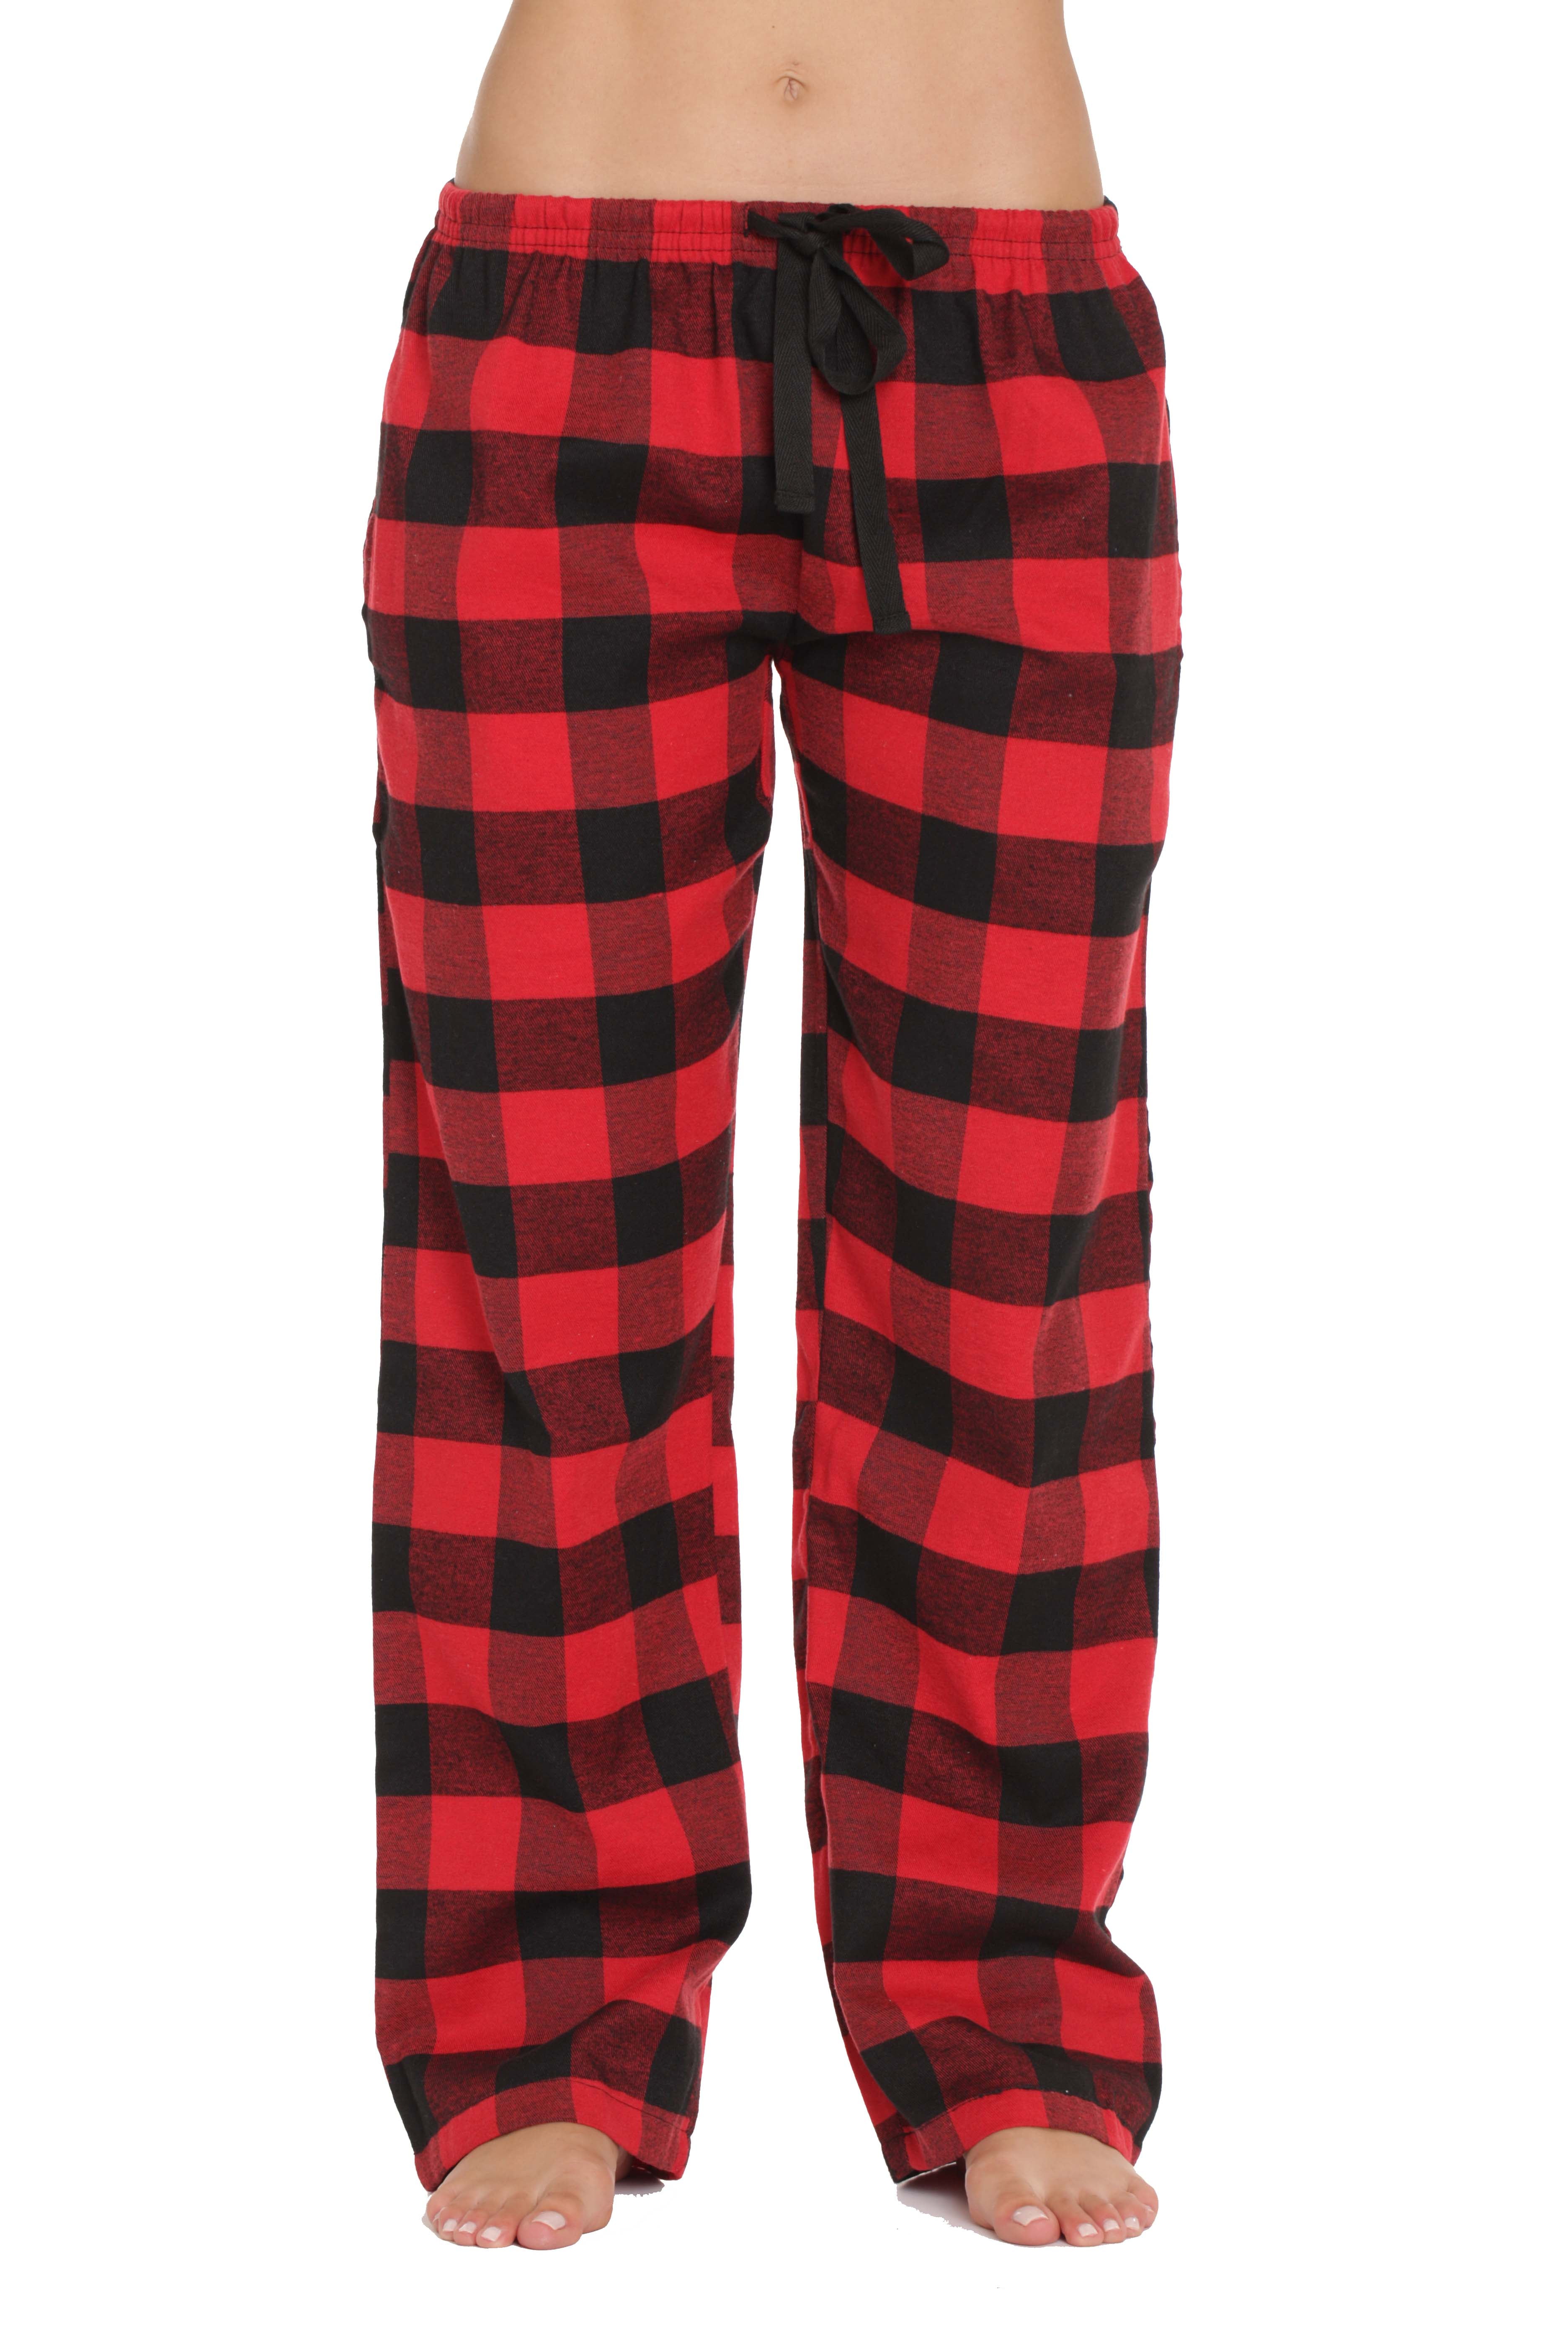 followme Buffalo Plaid Flannel Pajama Pants for Women with Pockets (Red -  Buffalo Plaid, 2X) 